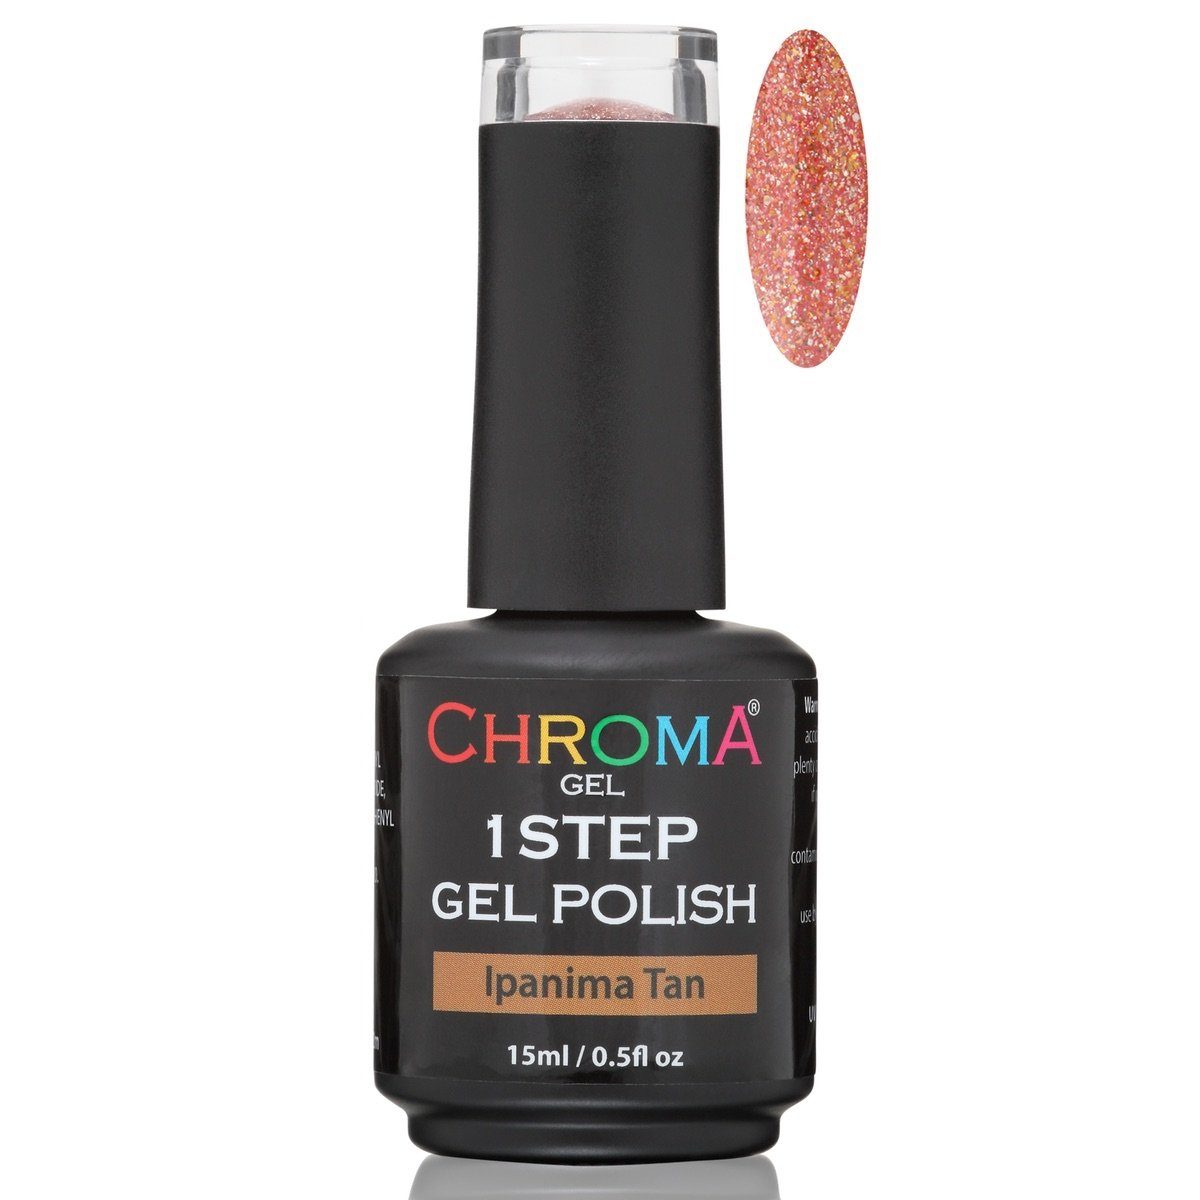 Chroma Gel 1 Step Gel Polish Ipanima Tan No.41 - Beauty Hair Products LtdChroma Gel